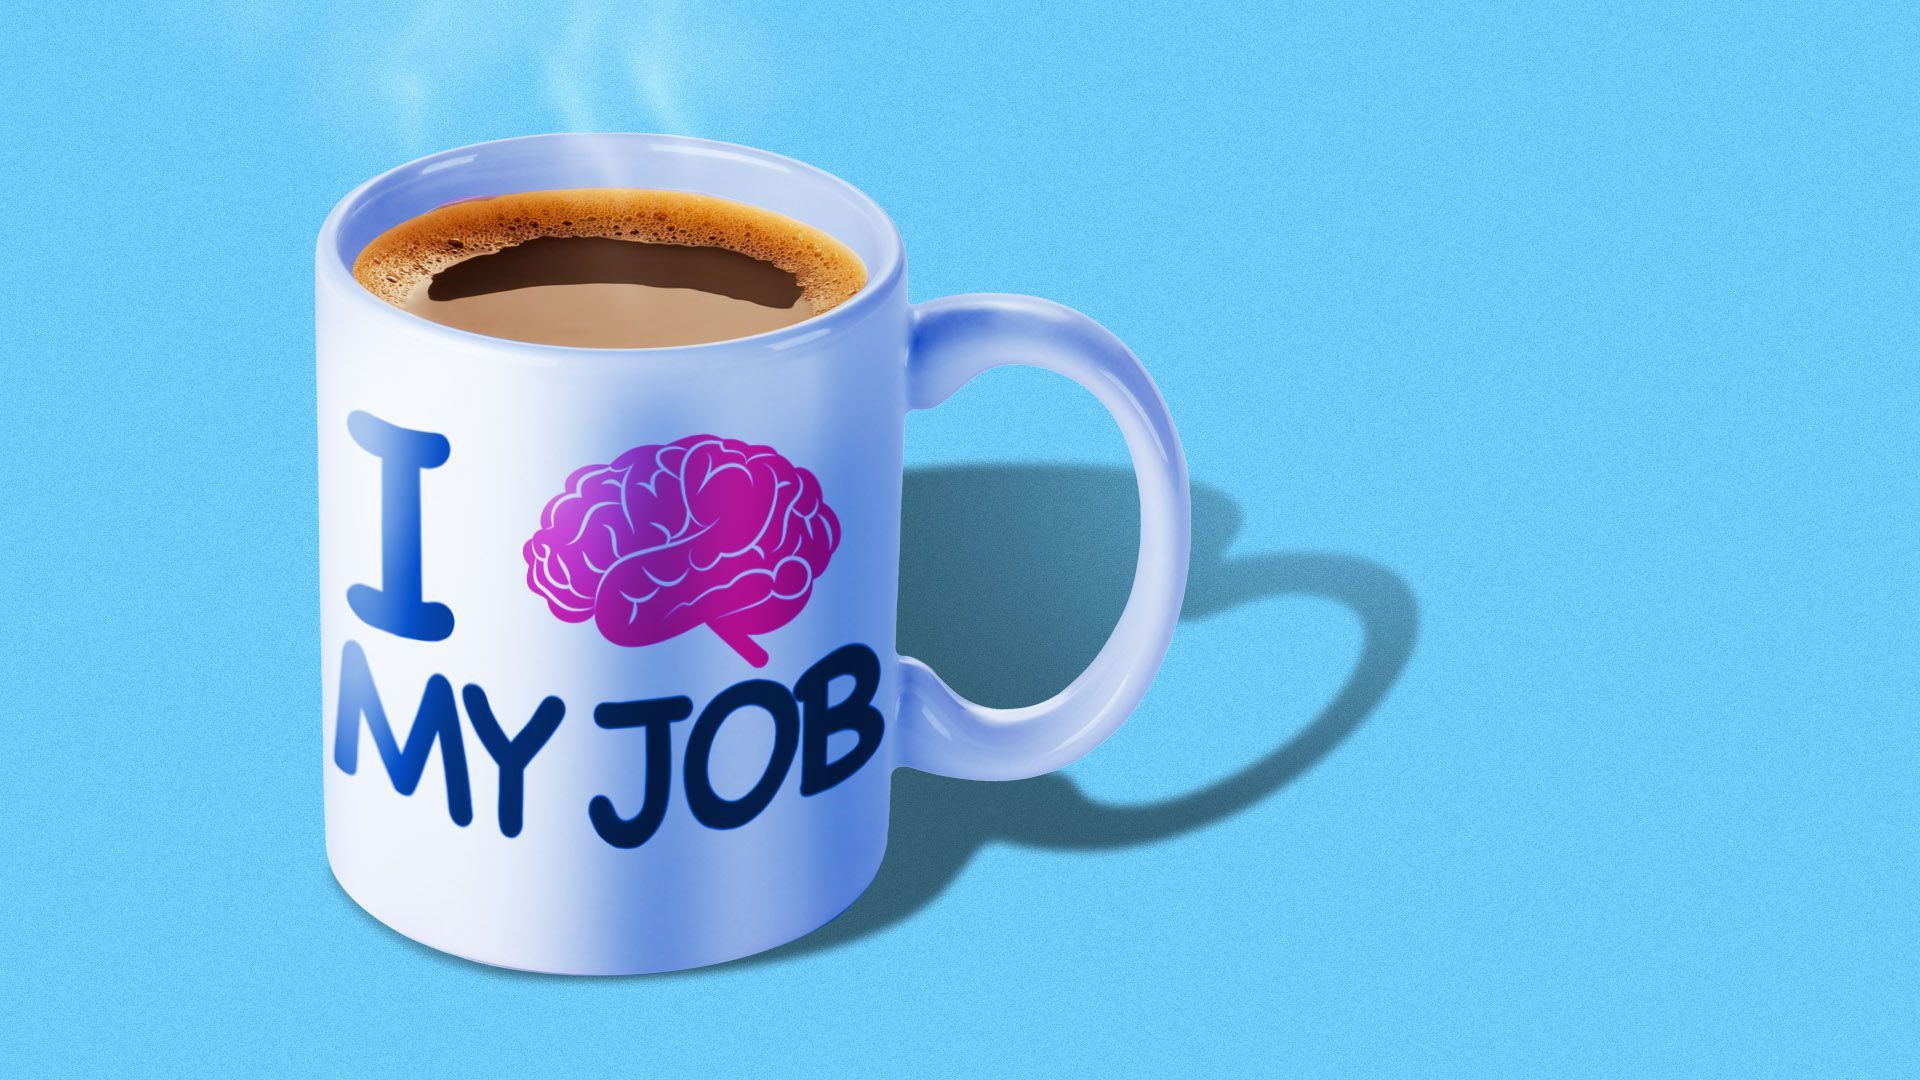 Coffee cup with I "brain" my job